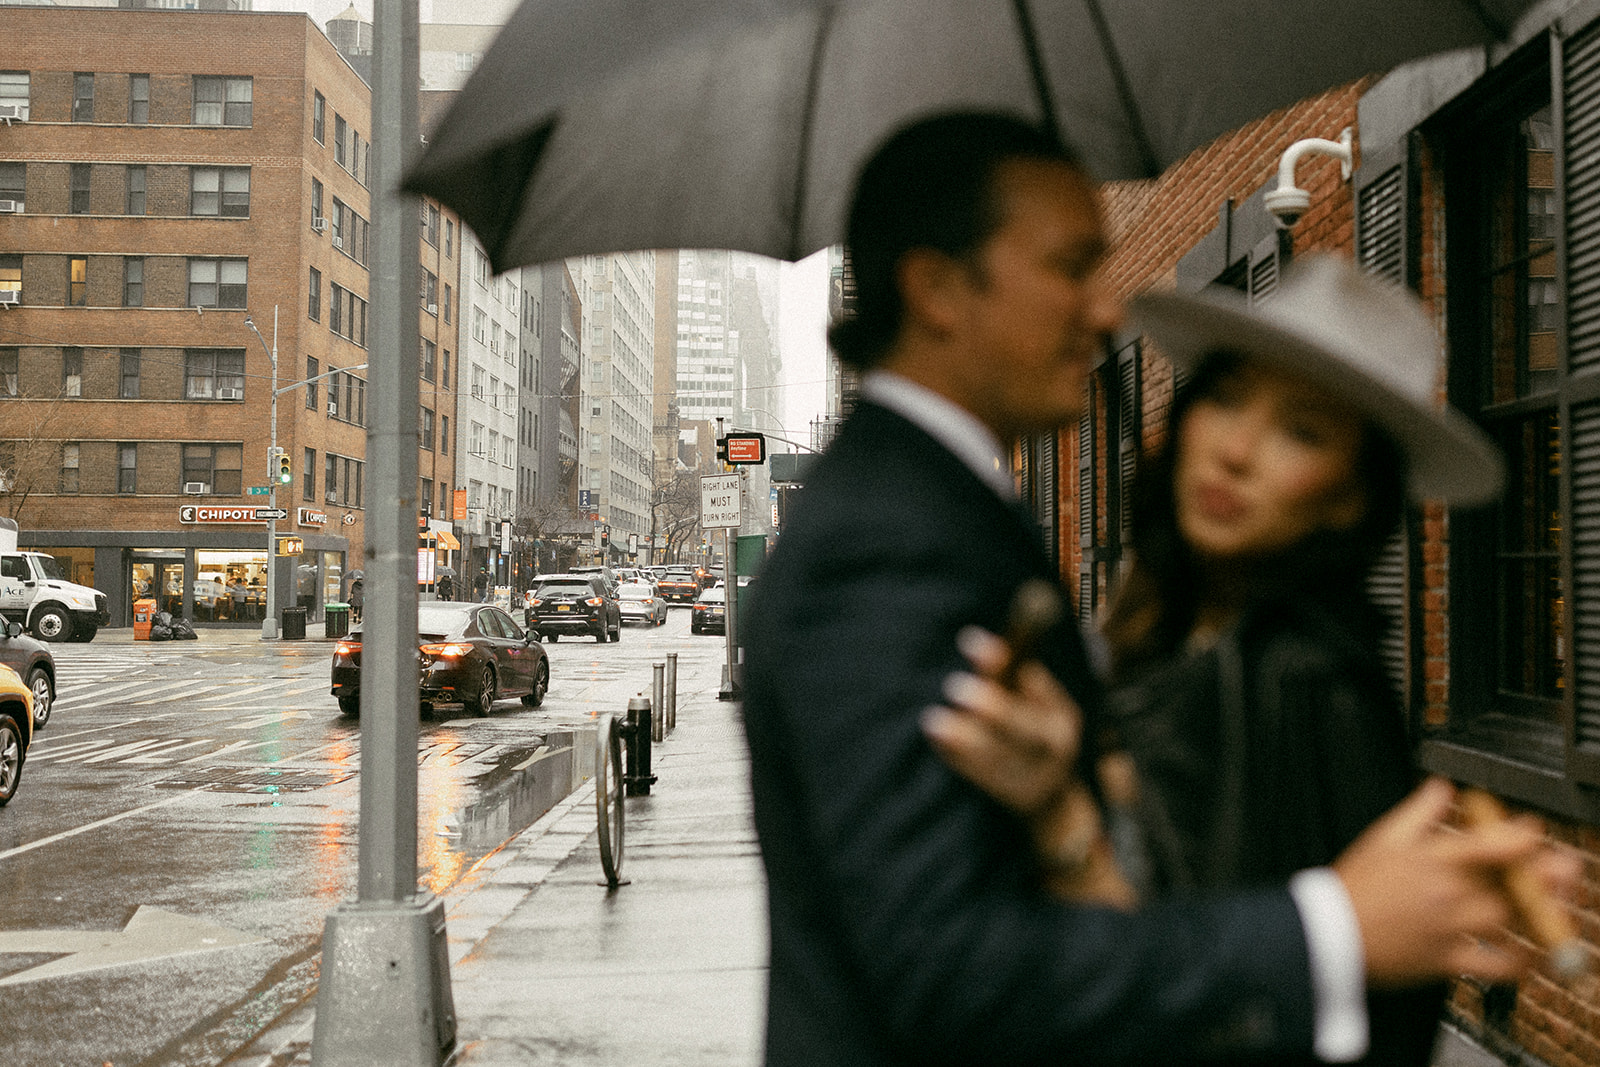 Rainy New York City Engagement